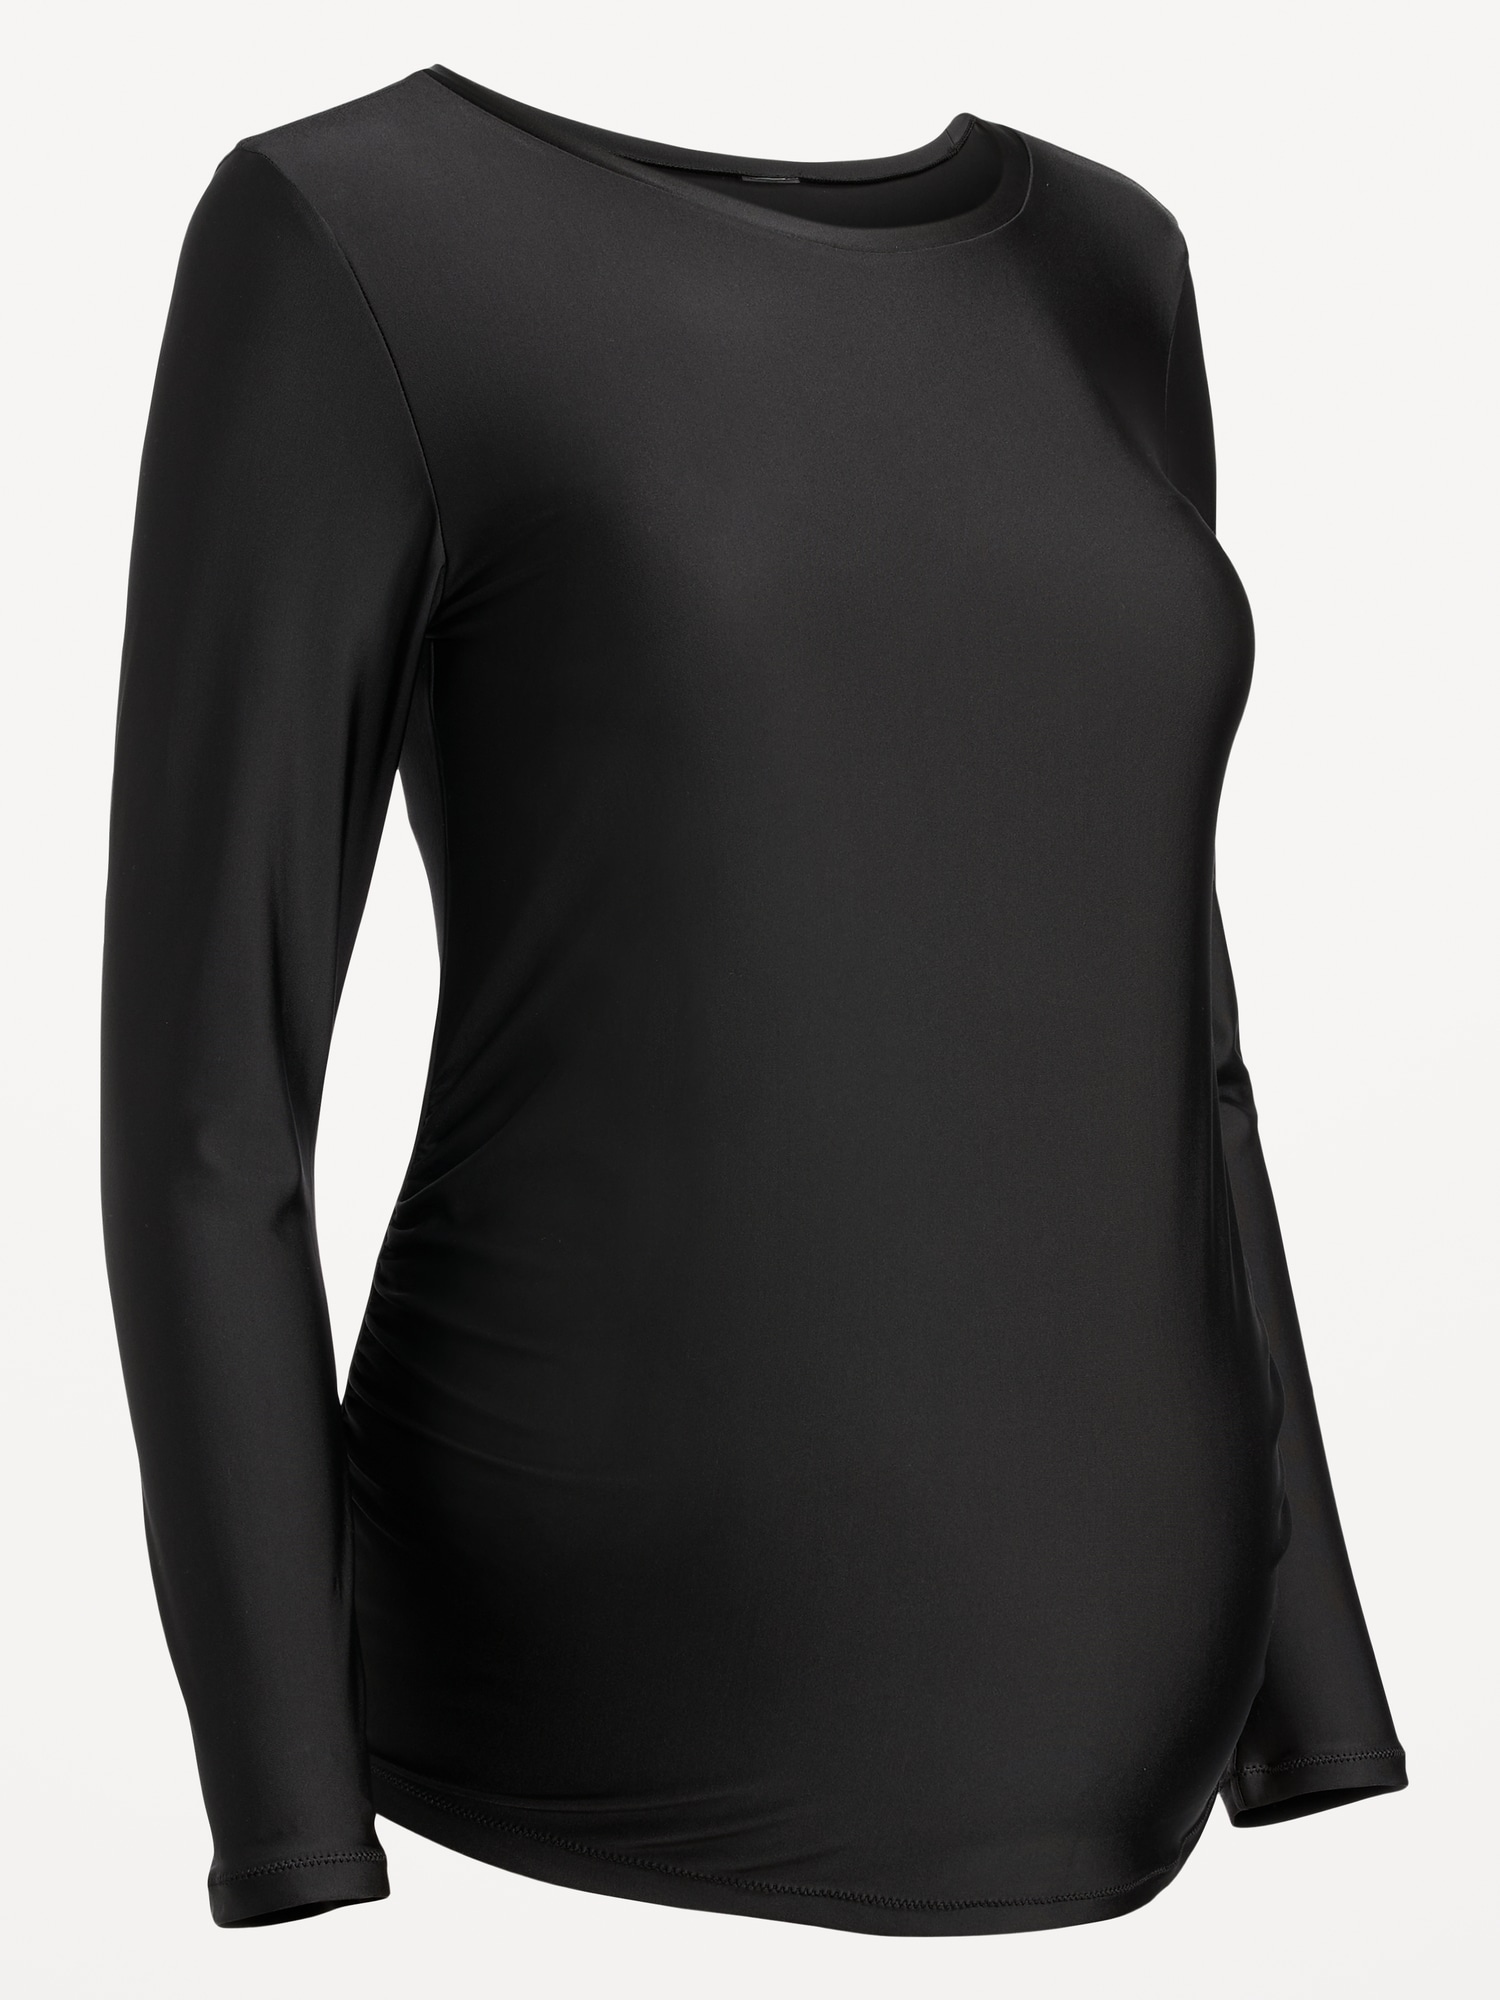 Long Sleeve Maternity Rash Guard Swim Shirt - Black With White Polka Dots -  Mermaid Maternity